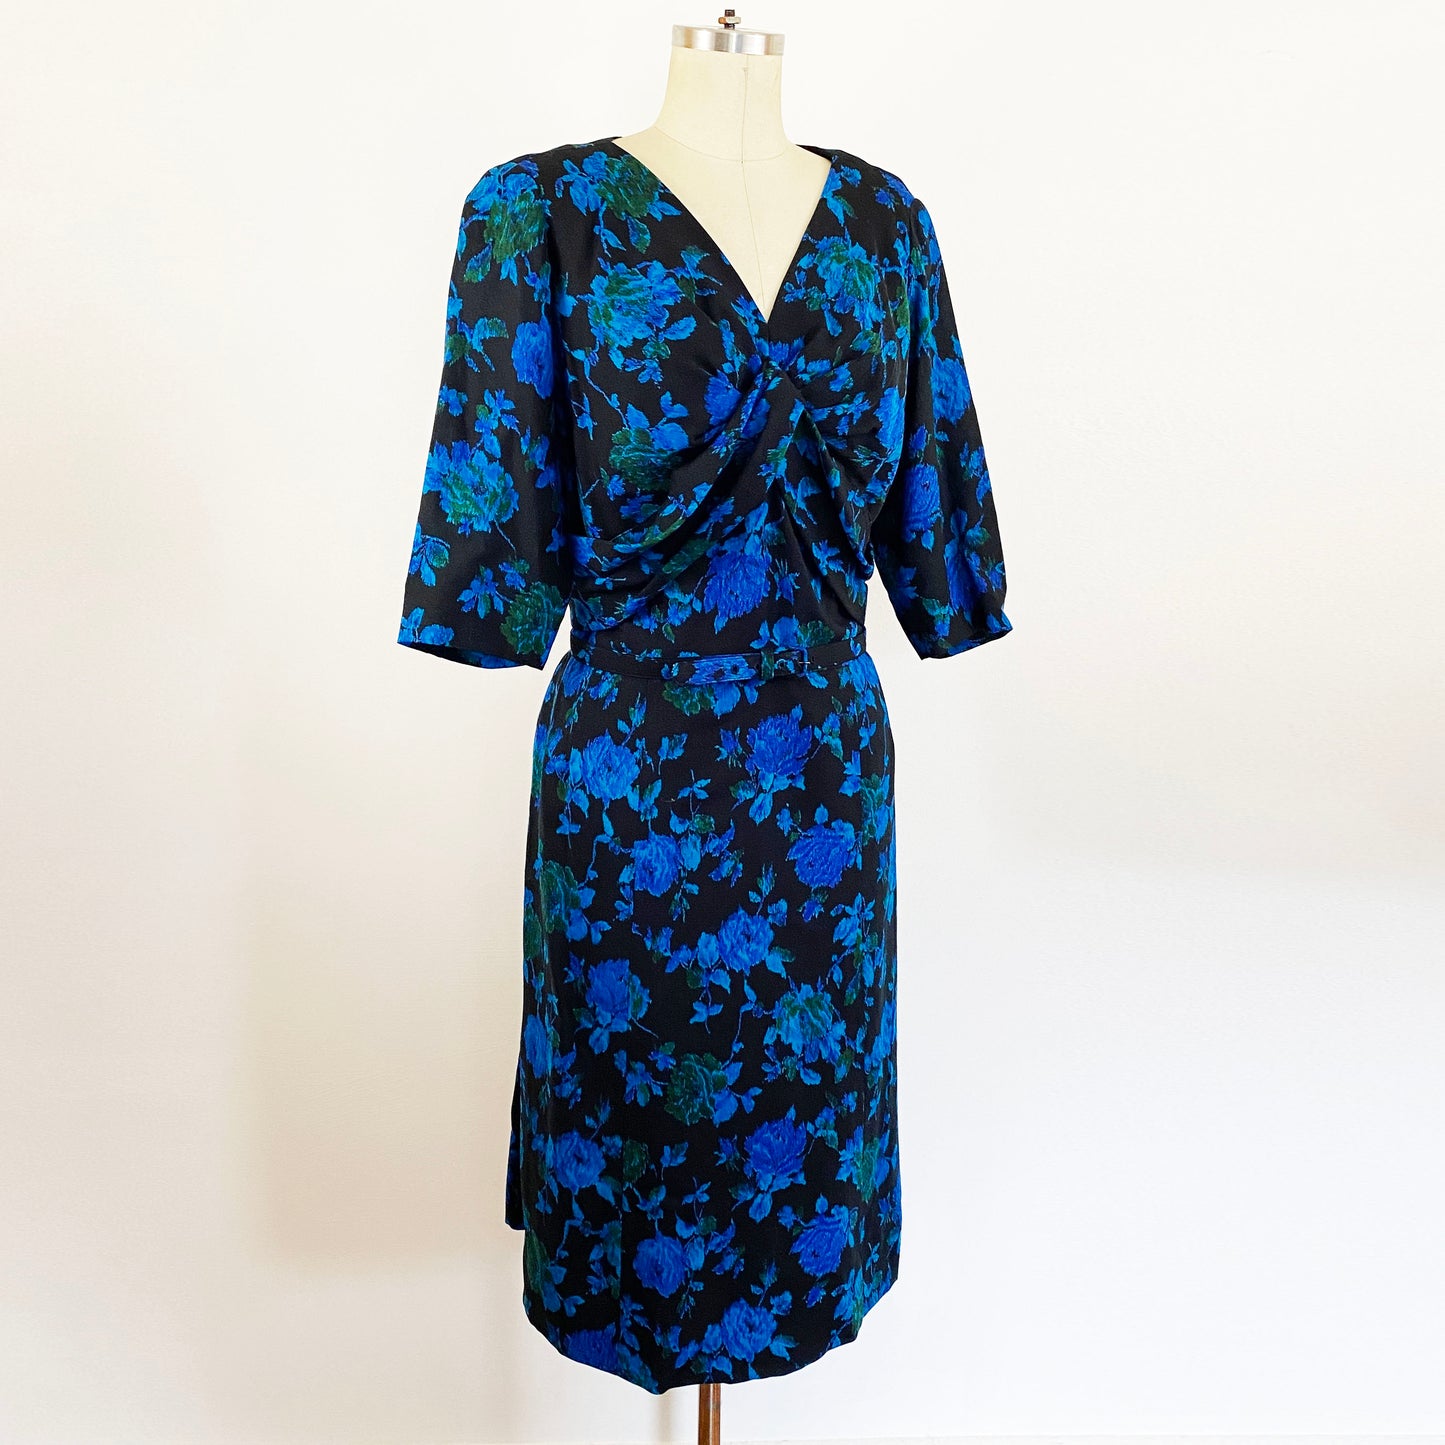 1950s Black and Blue Rose Floral Wool A-line Dress Cocktail Dress Retro Party Dress / Vintage Plus Size 0X 14/16